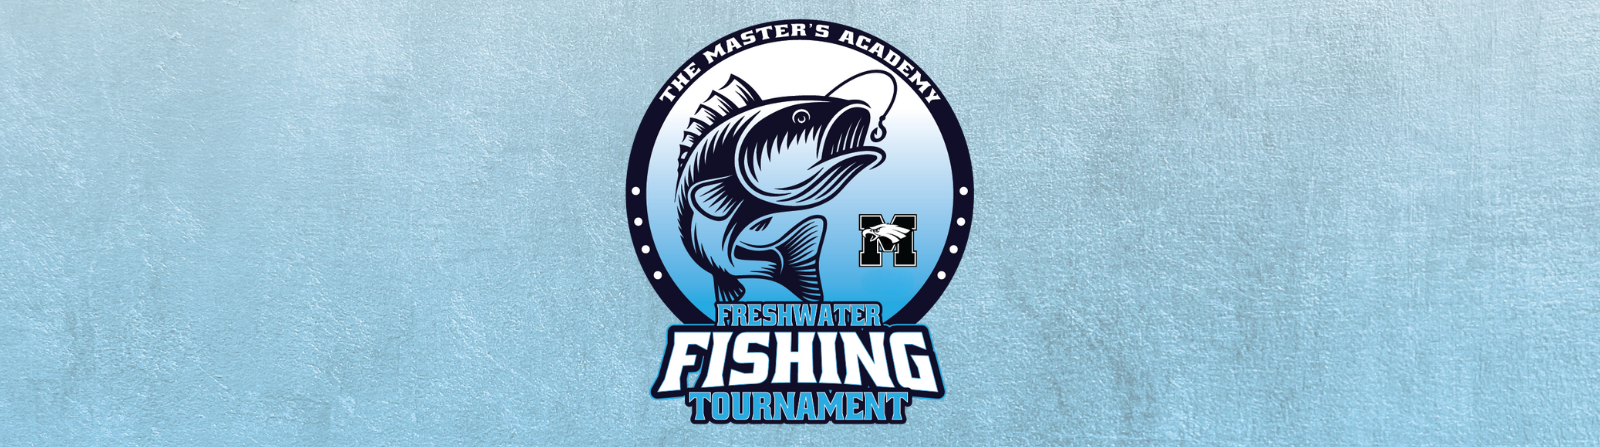 Fishing Tournament Banner